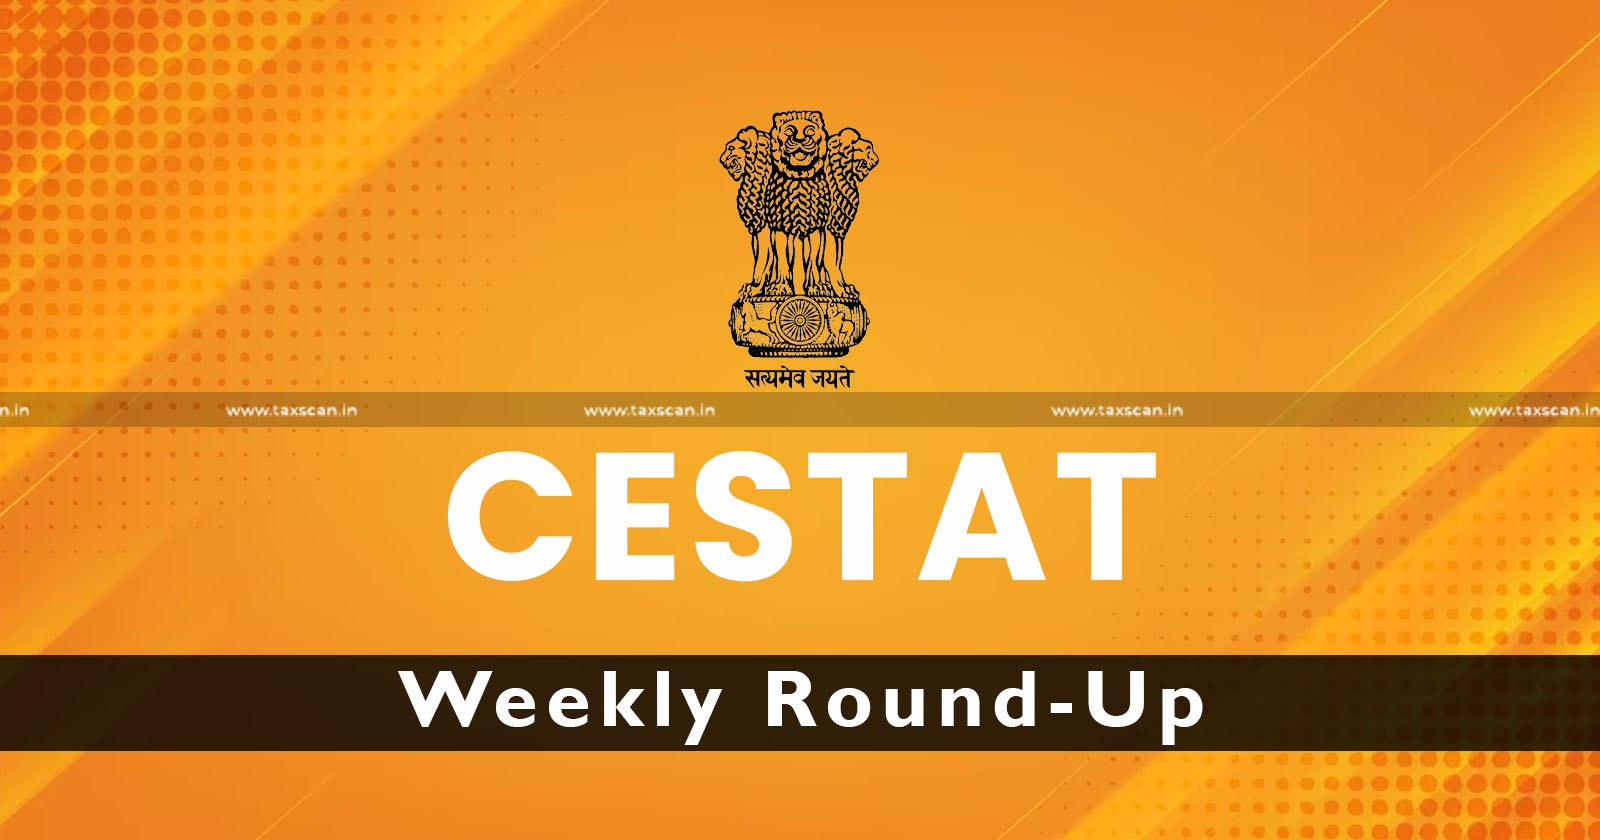 CESTAT Weekly Round-Up - CESTAT - Round-Up - Weekly Round-Up - Taxscan